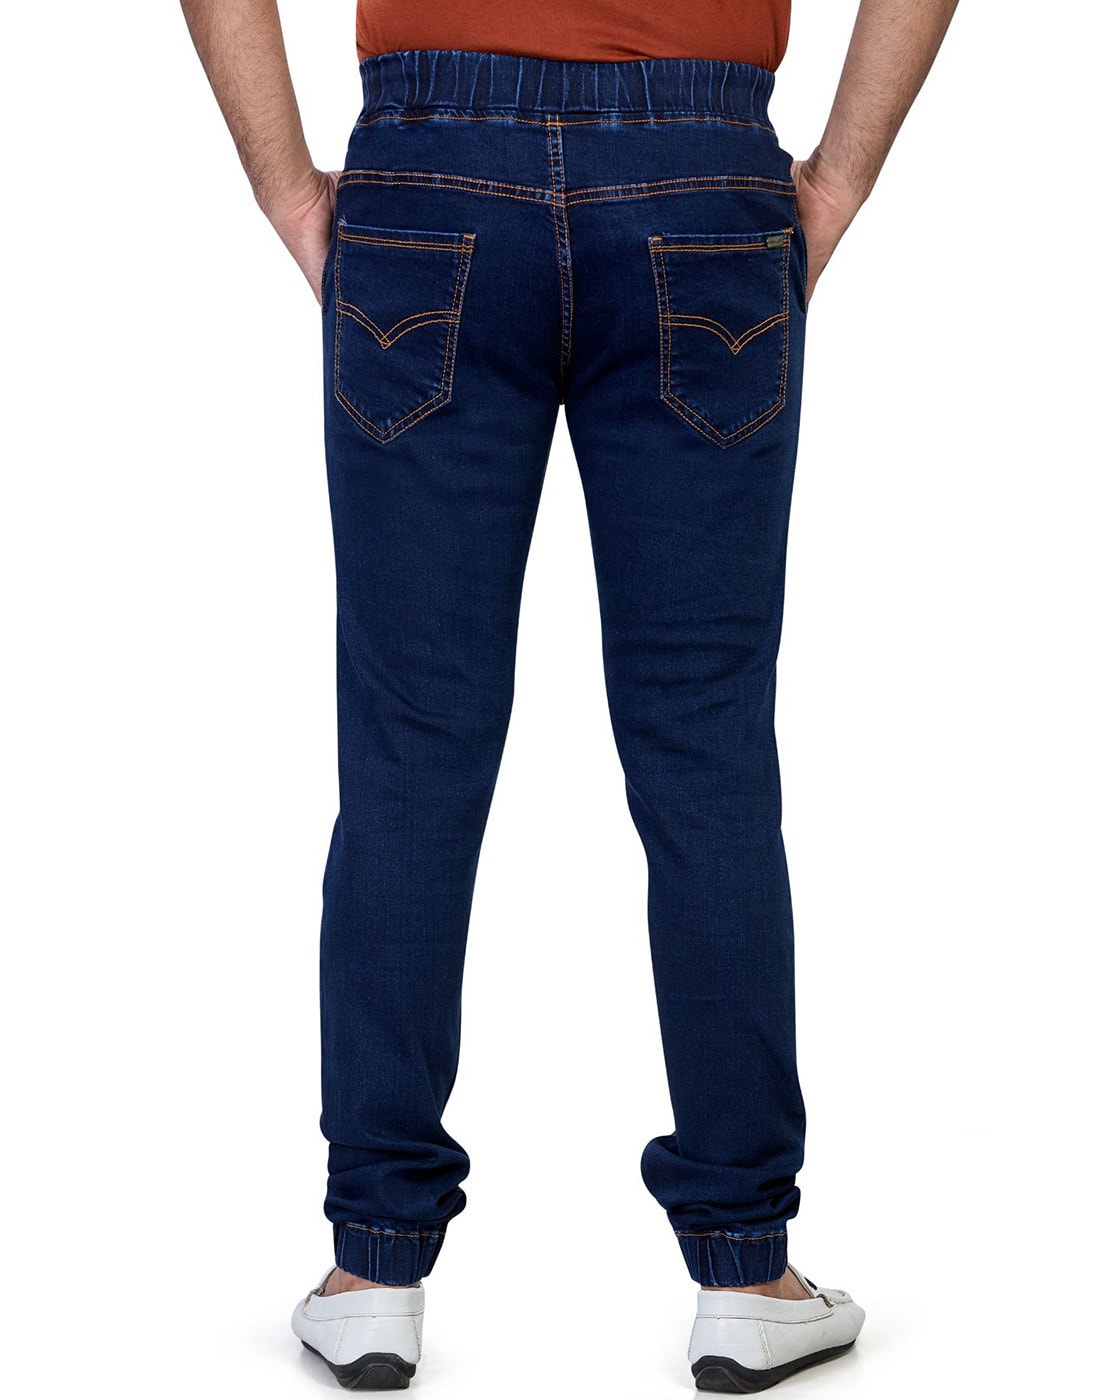 Buy Blue Jeans for Men by REA-LIZE Online